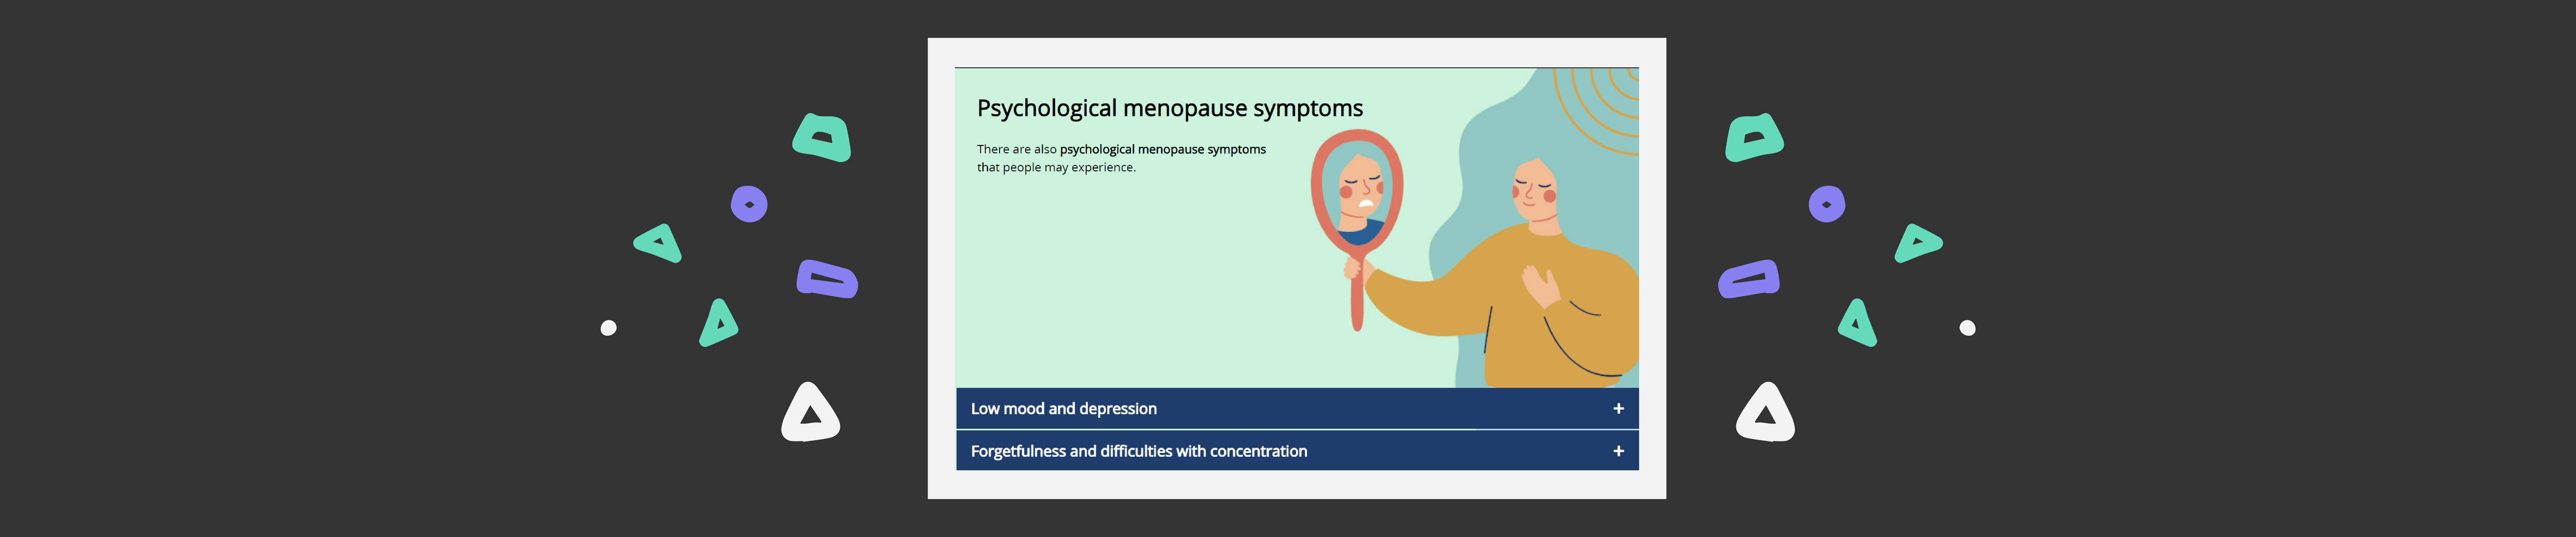 menopause training course snapshot - psychological menopause symptoms